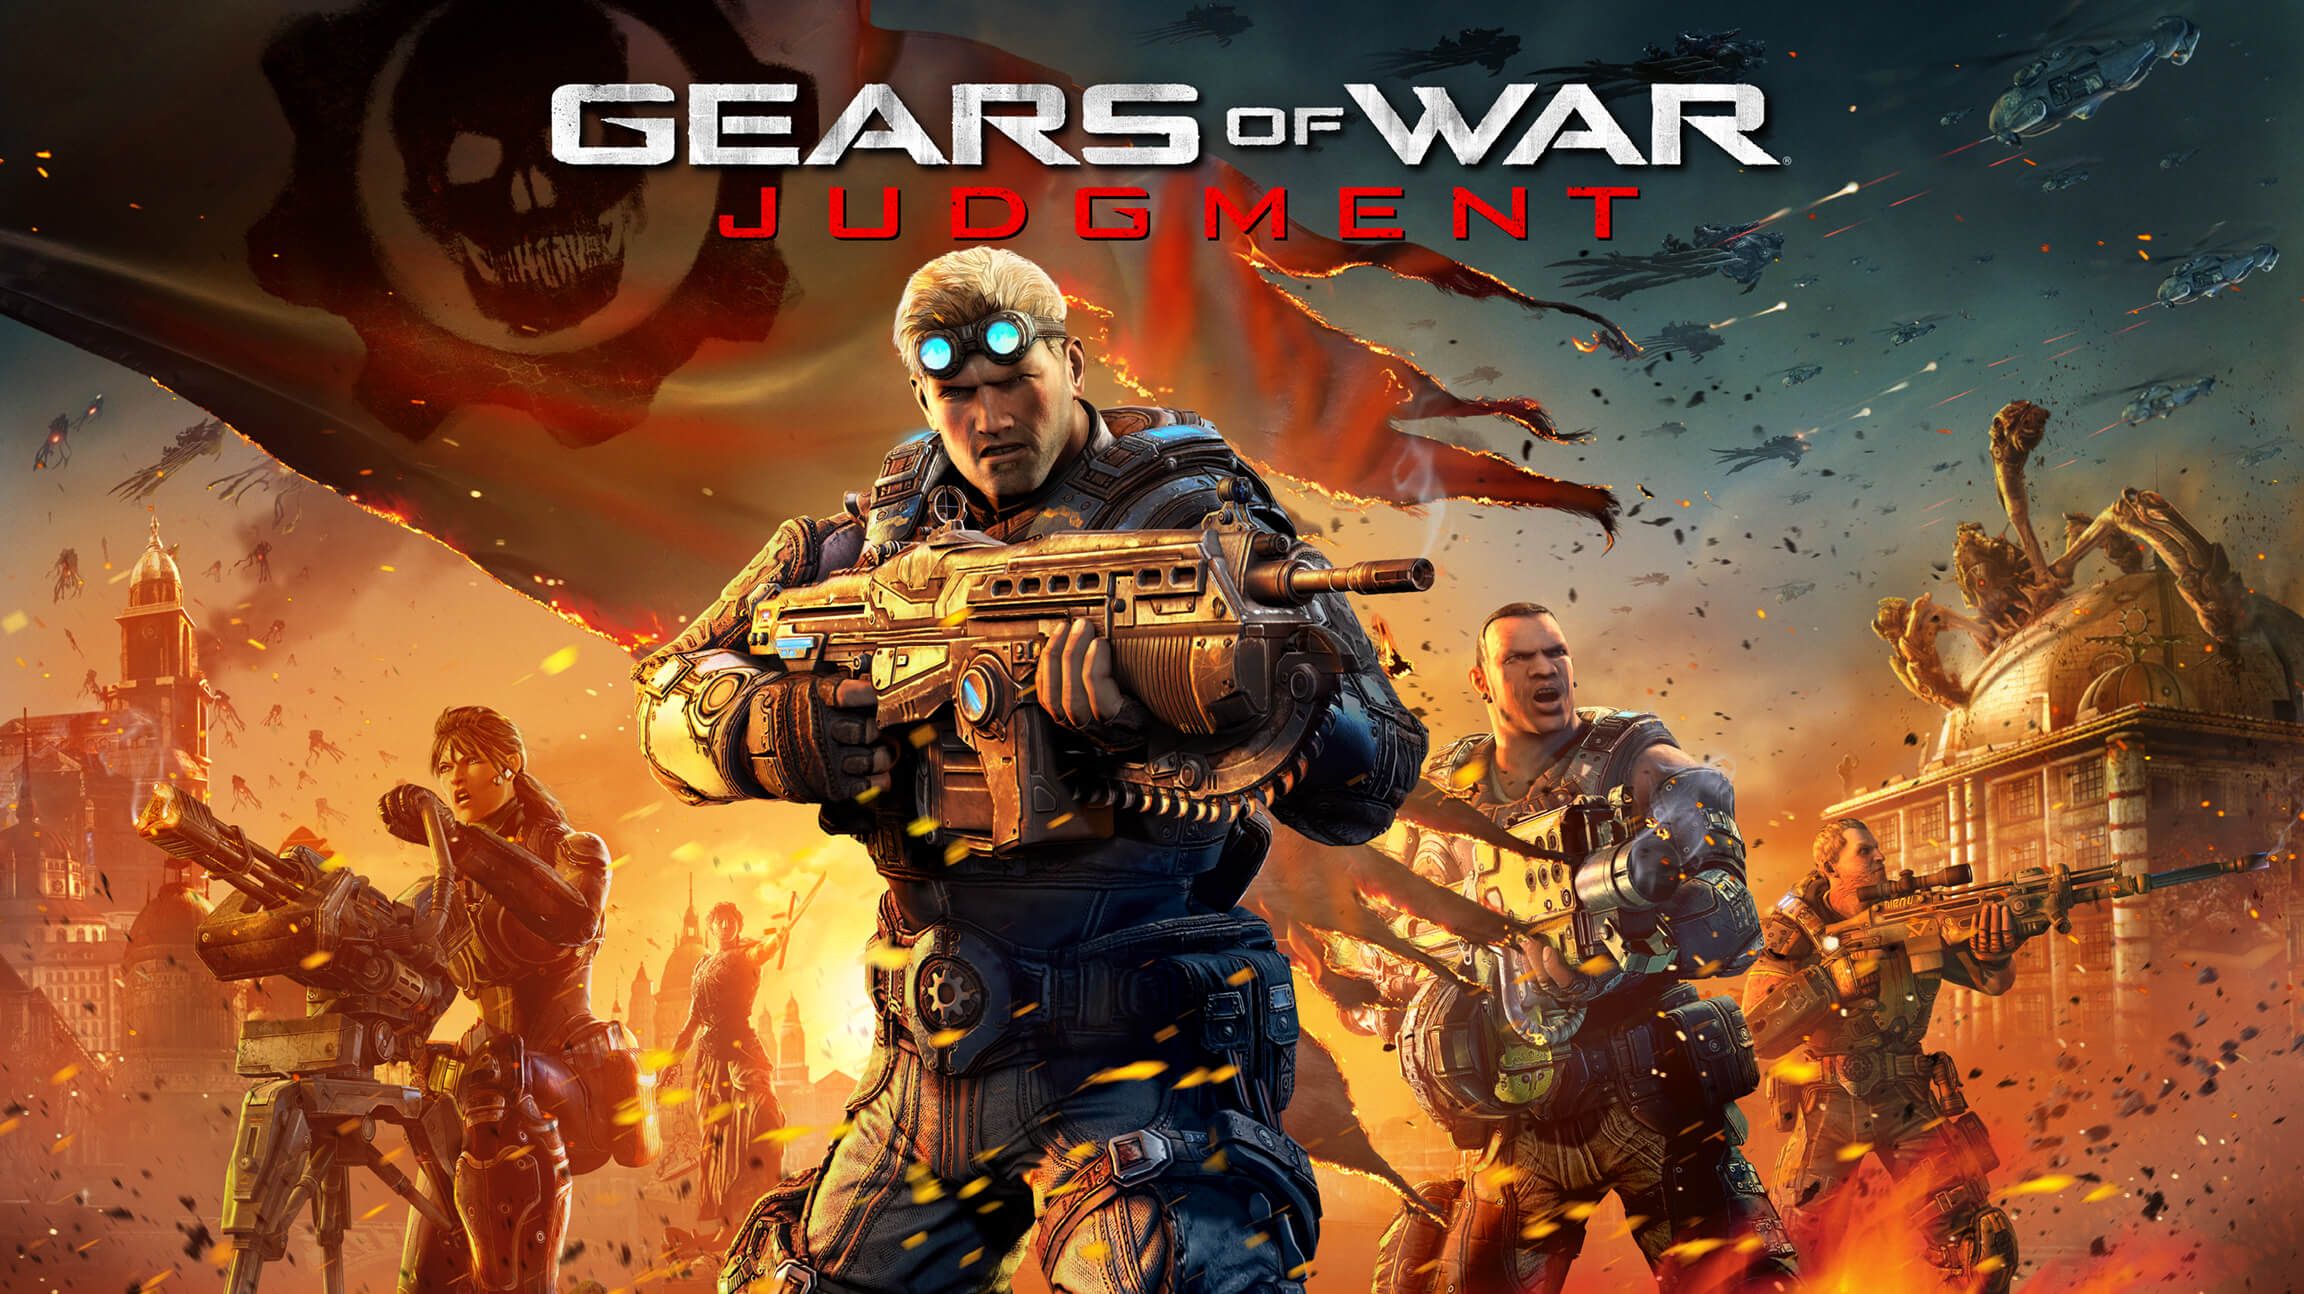 Gears of War Judgment Cast